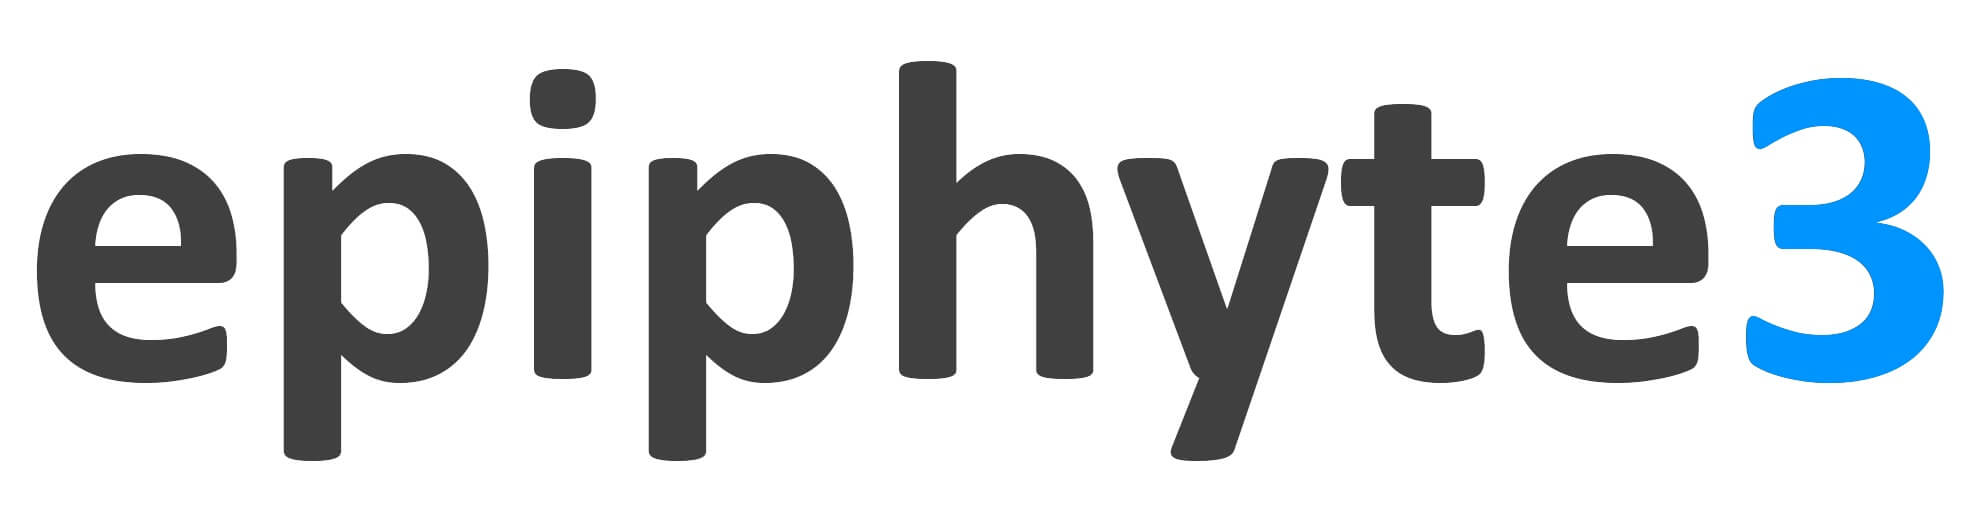 Epiphyte3 Logo